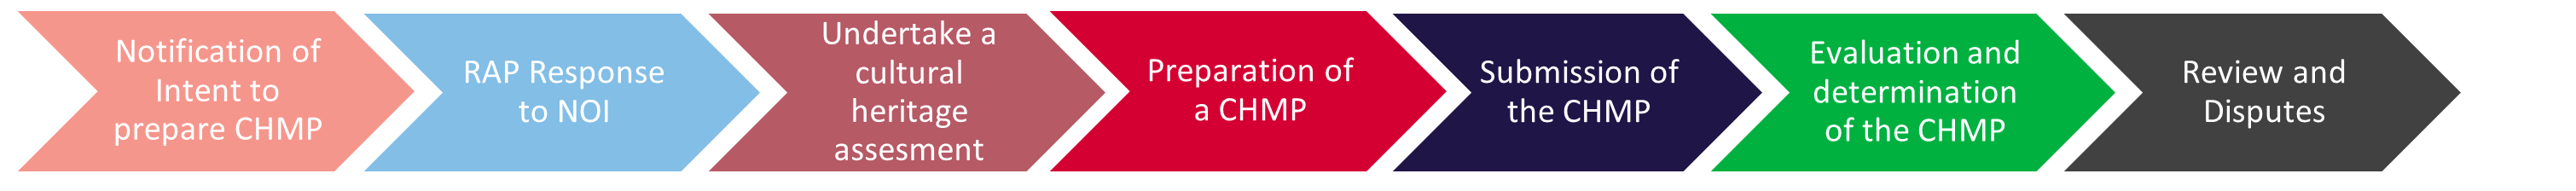 Summary-of-CHMP-process